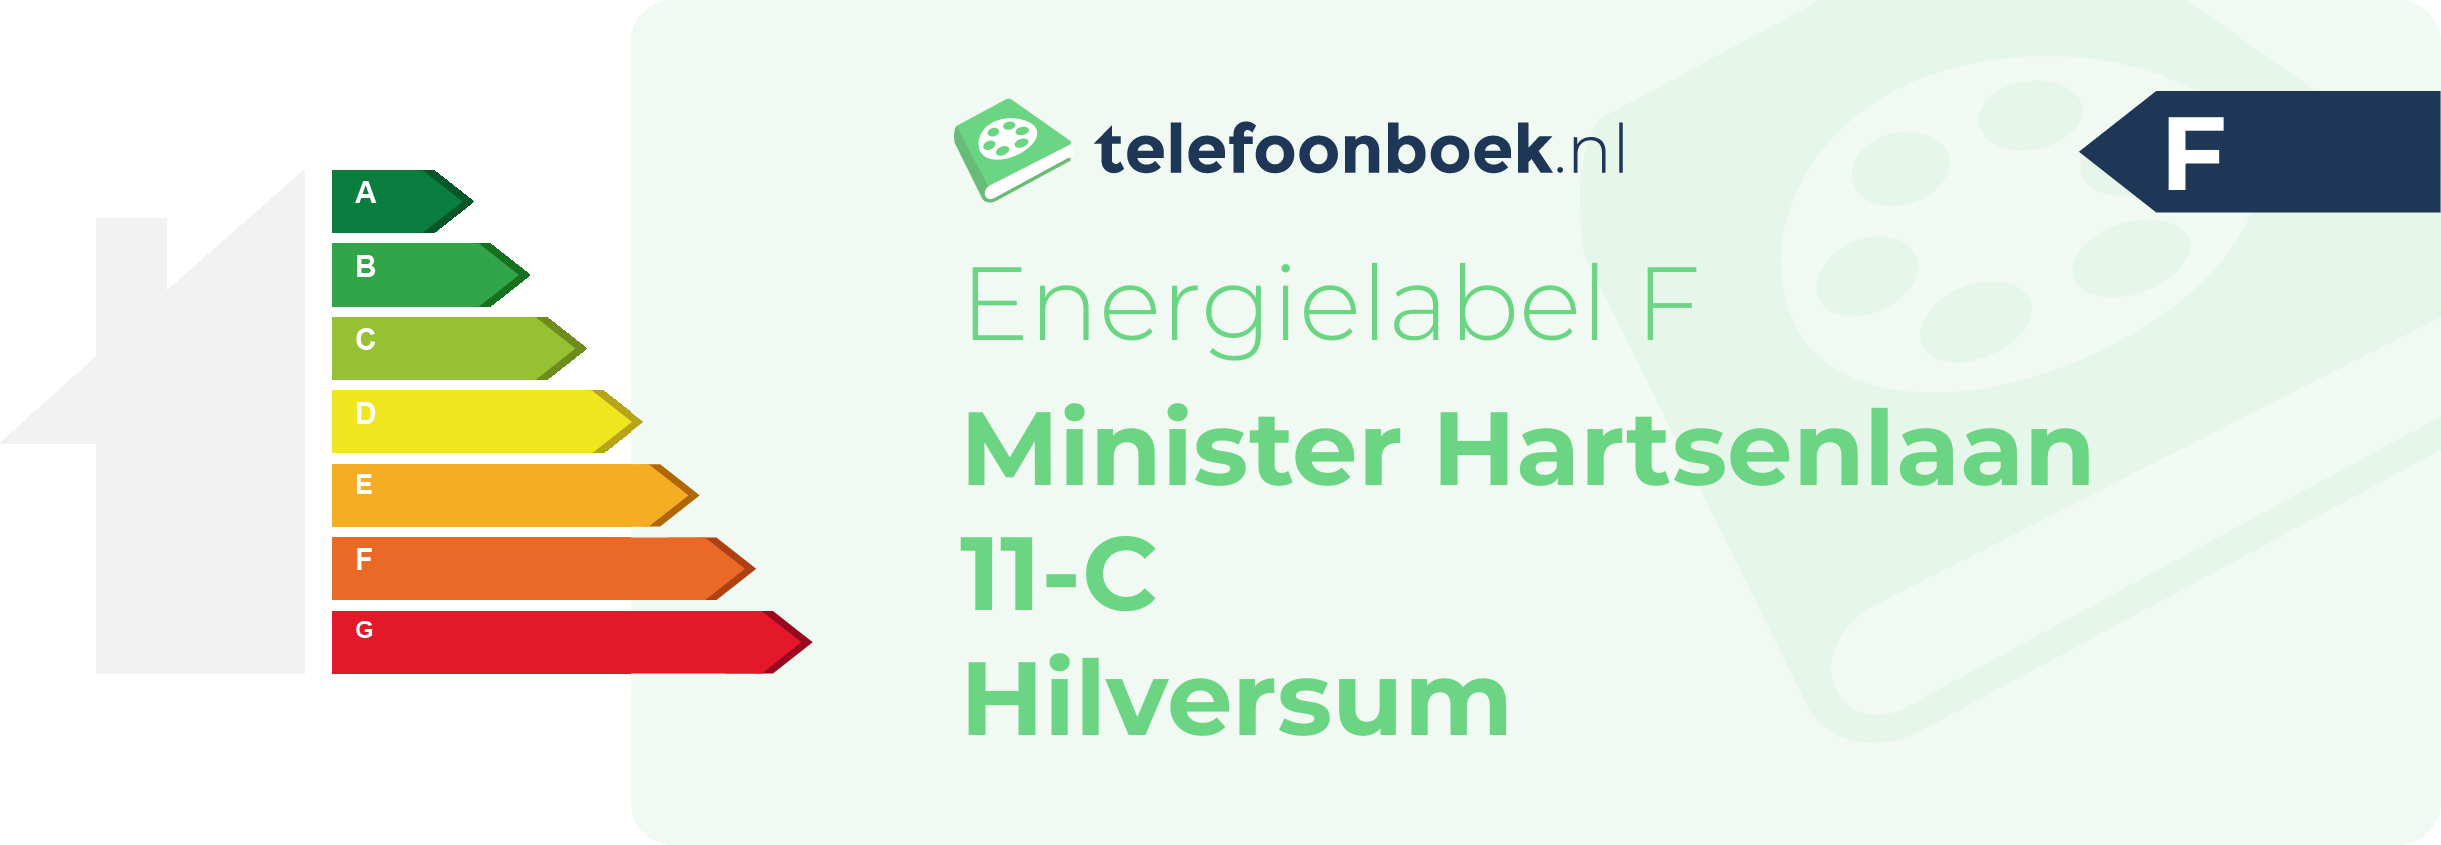 Energielabel Minister Hartsenlaan 11-C Hilversum